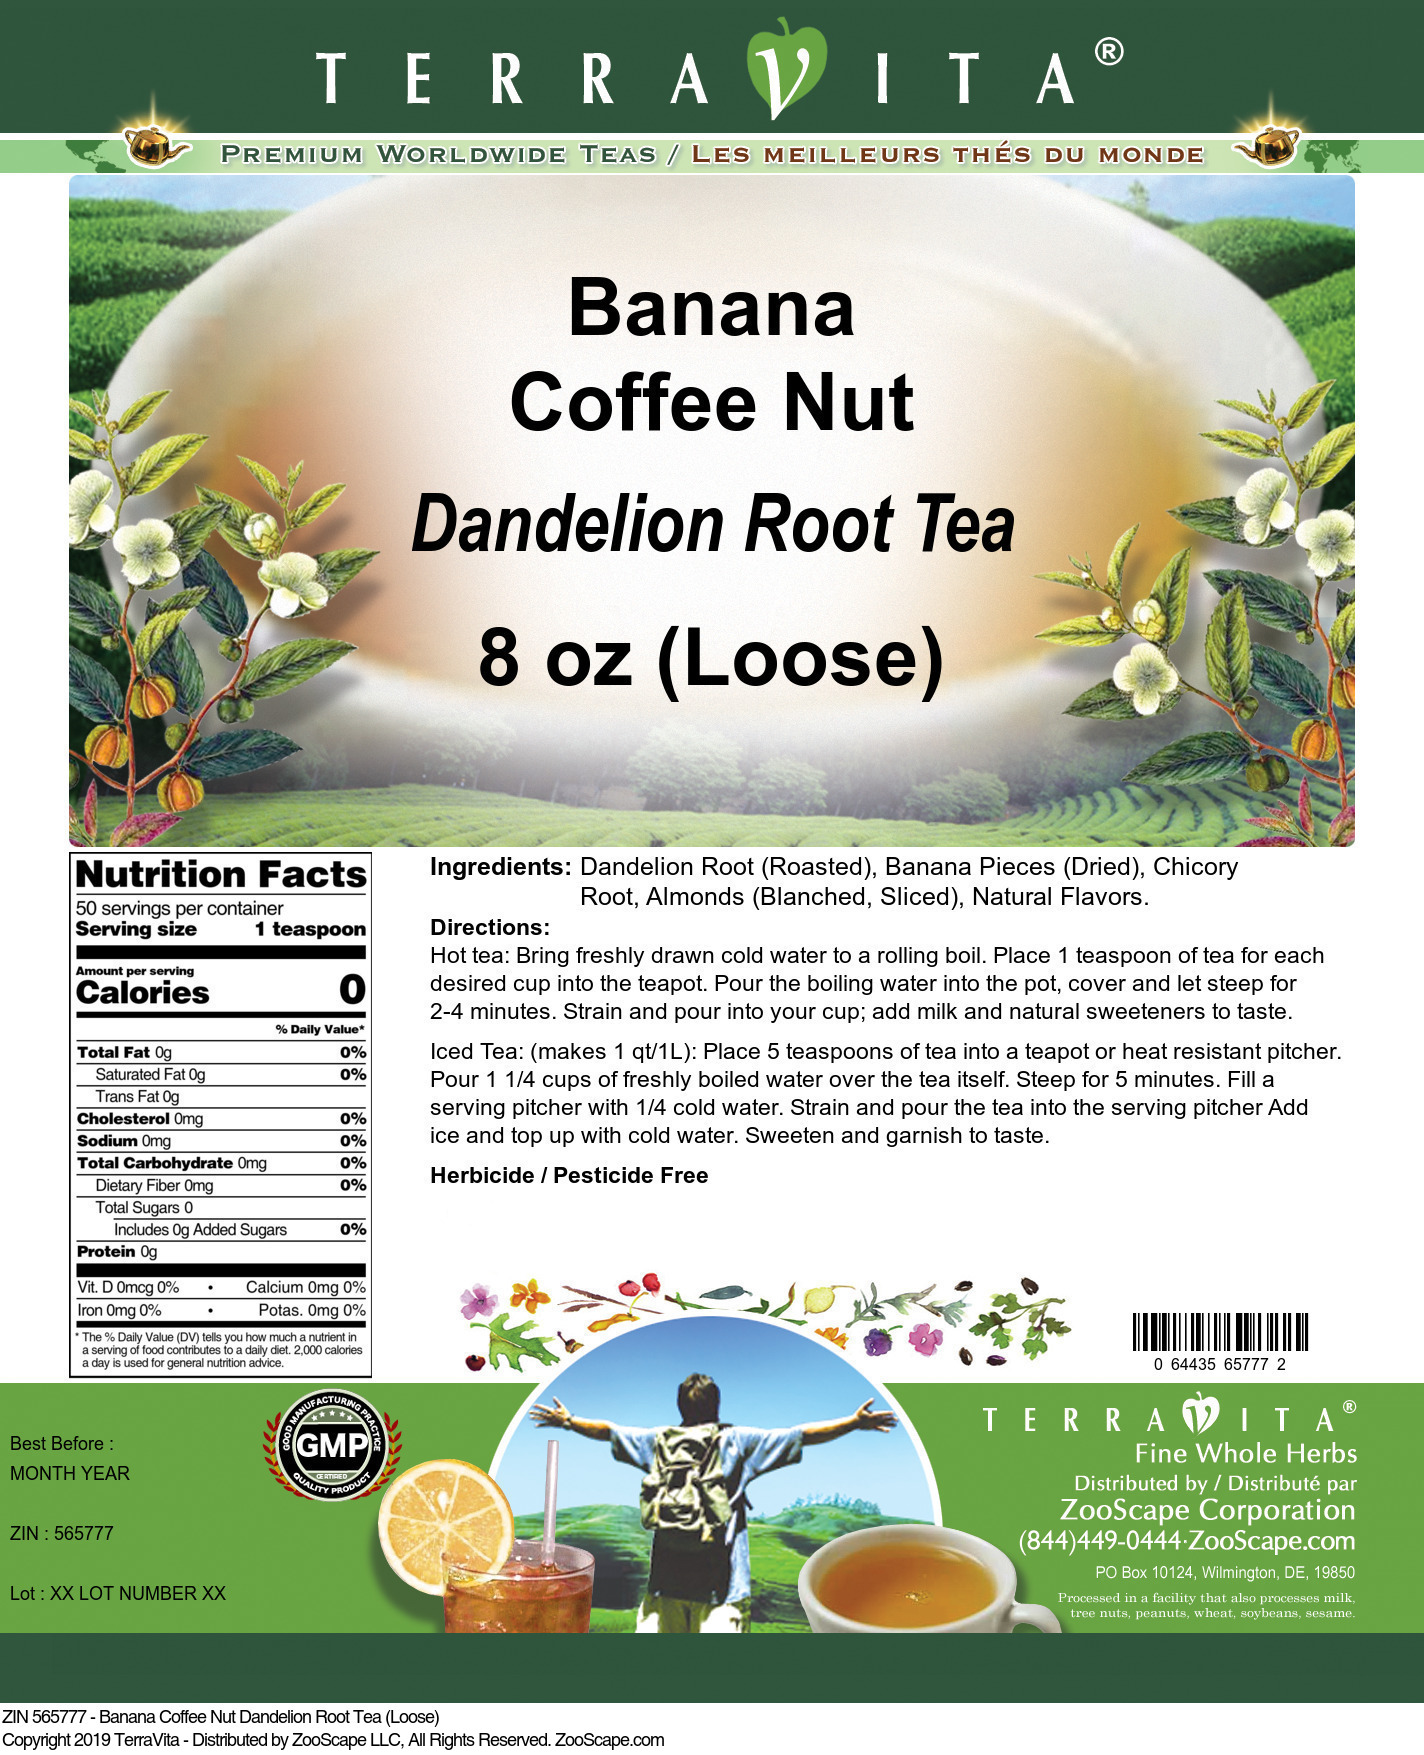 Banana Coffee Nut Dandelion Root Tea (Loose) - Label